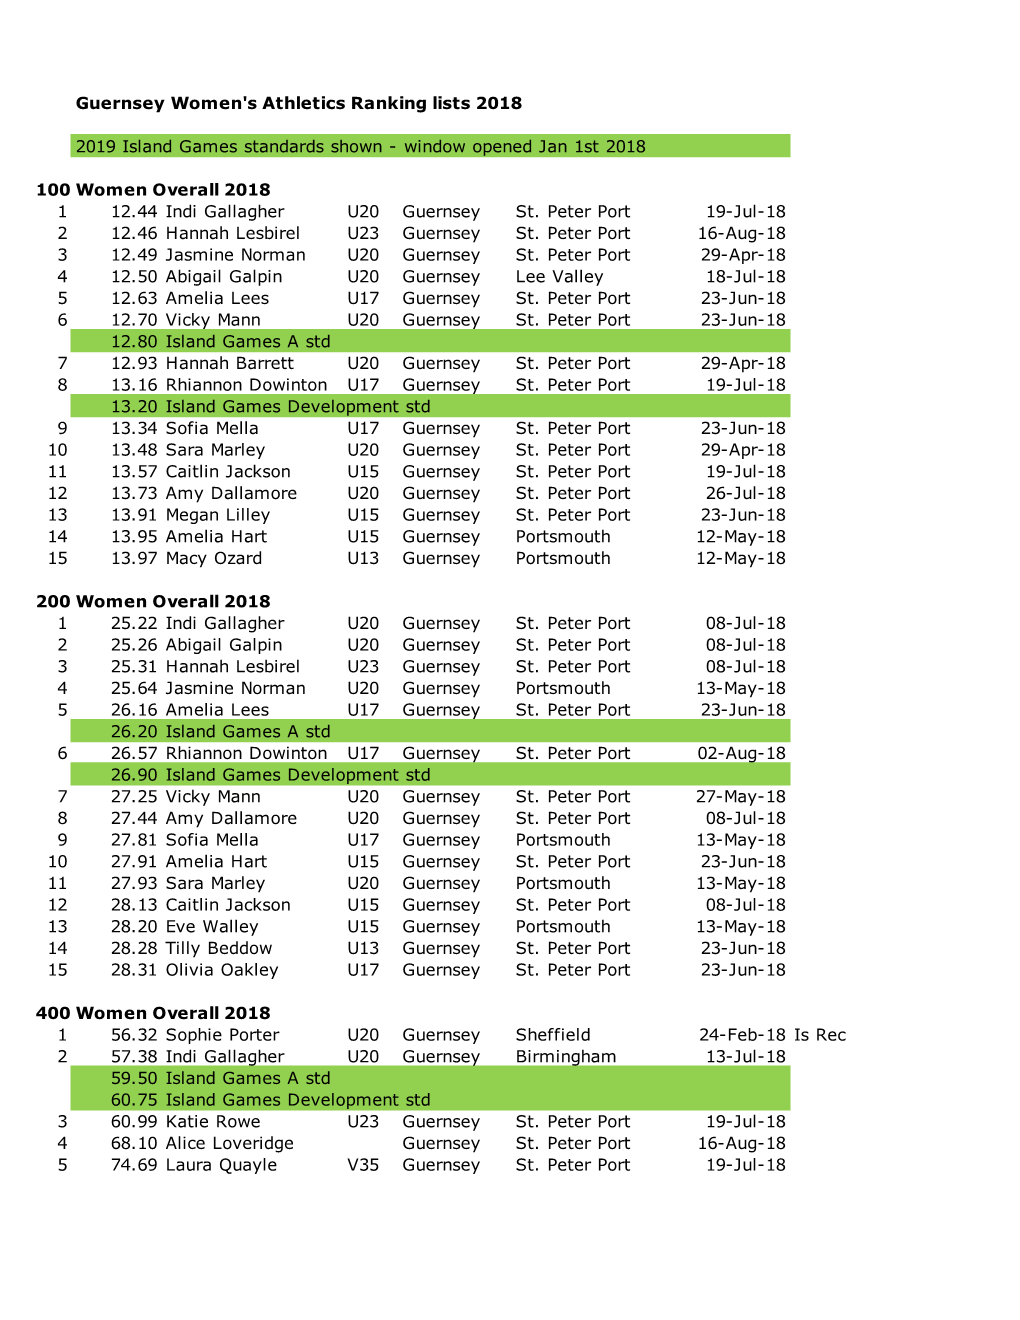 Guernsey Women's Athletics Ranking Lists 2018 2019 Island Games